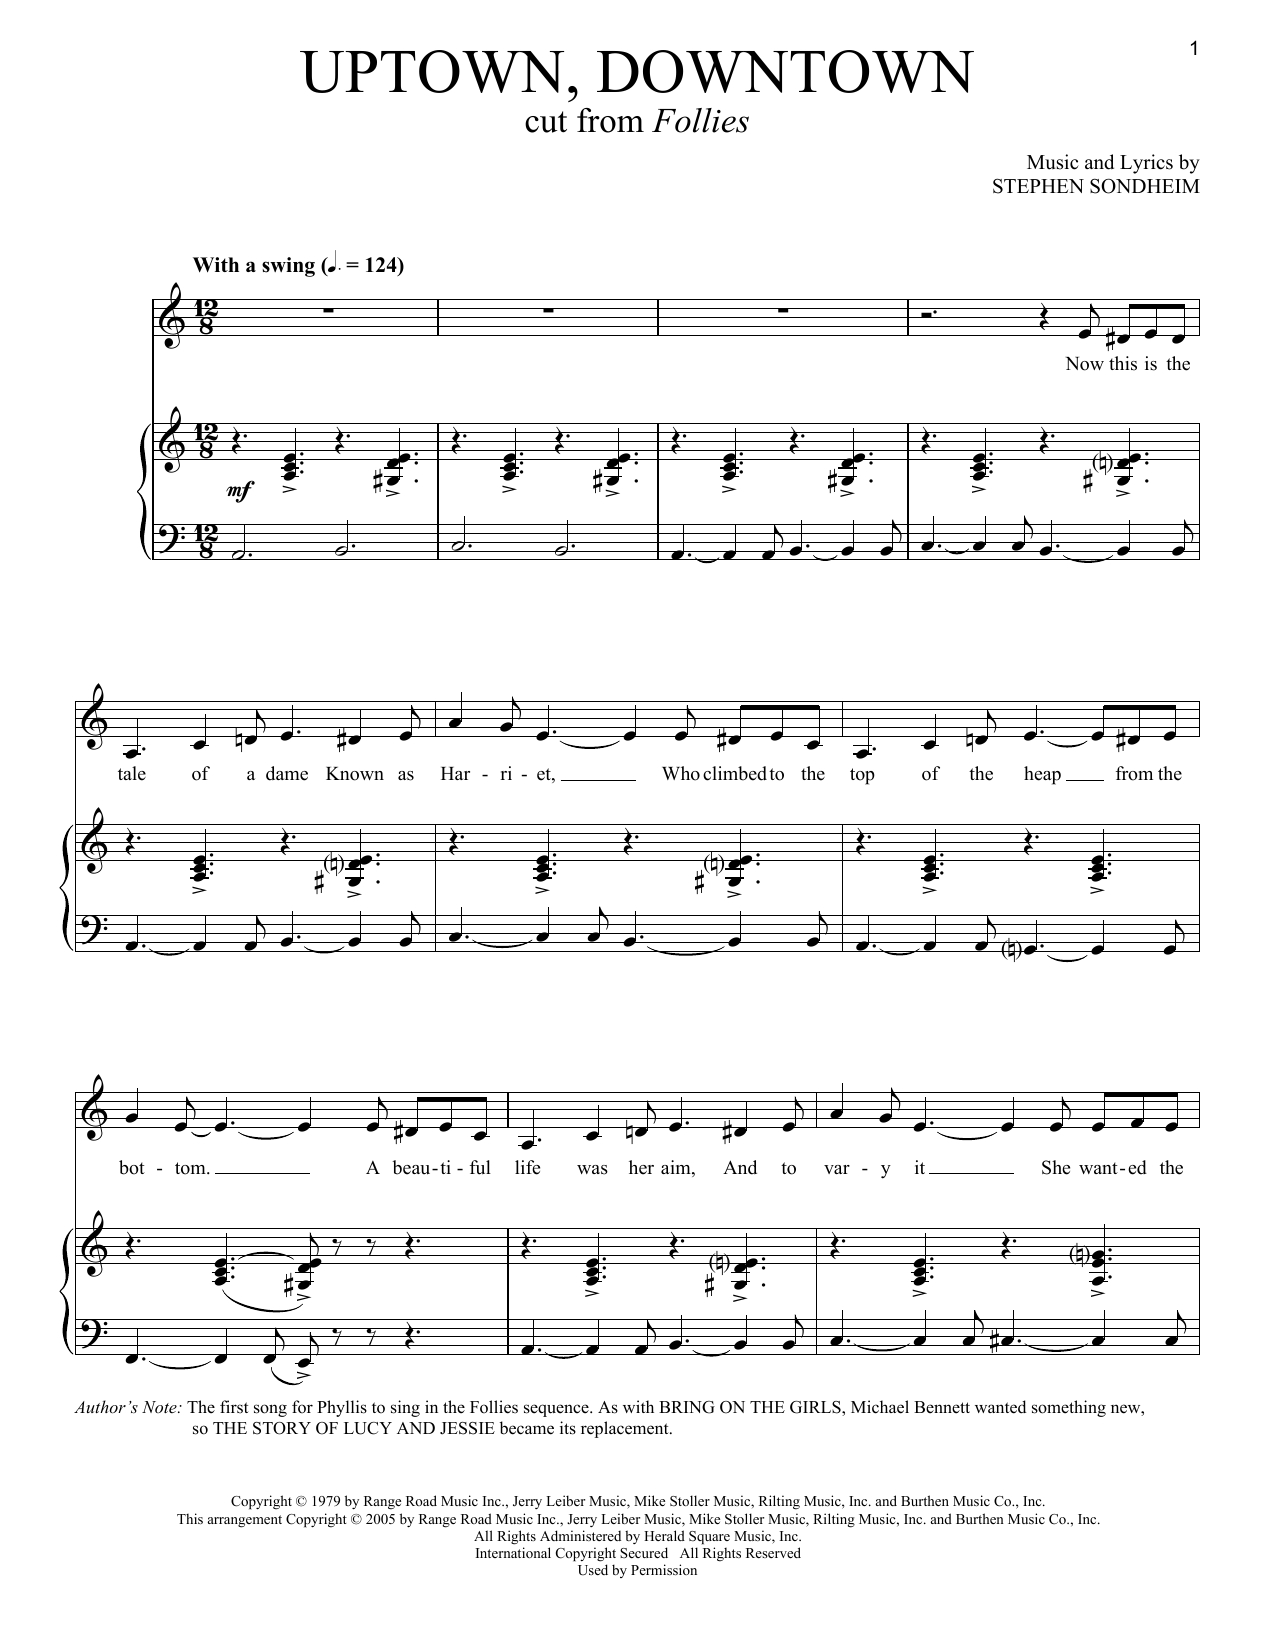 Piano Man Chords Stephen Sondheim Uptown Downtown Sheet Music Notes Chords Download Printable Piano Vocal Sku 150958